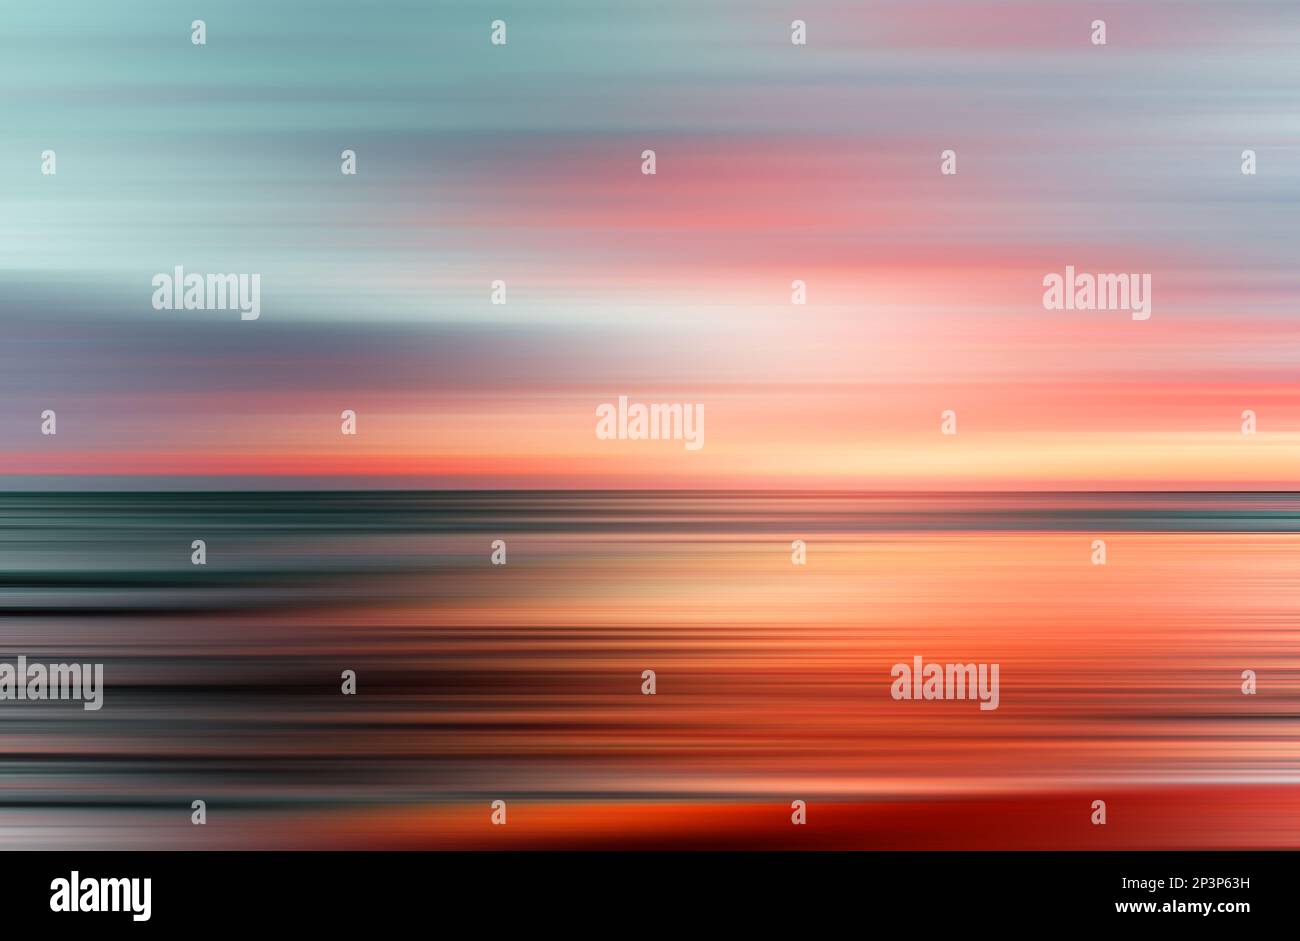 sunset colors on ocean horizon, motion blur Stock Photo